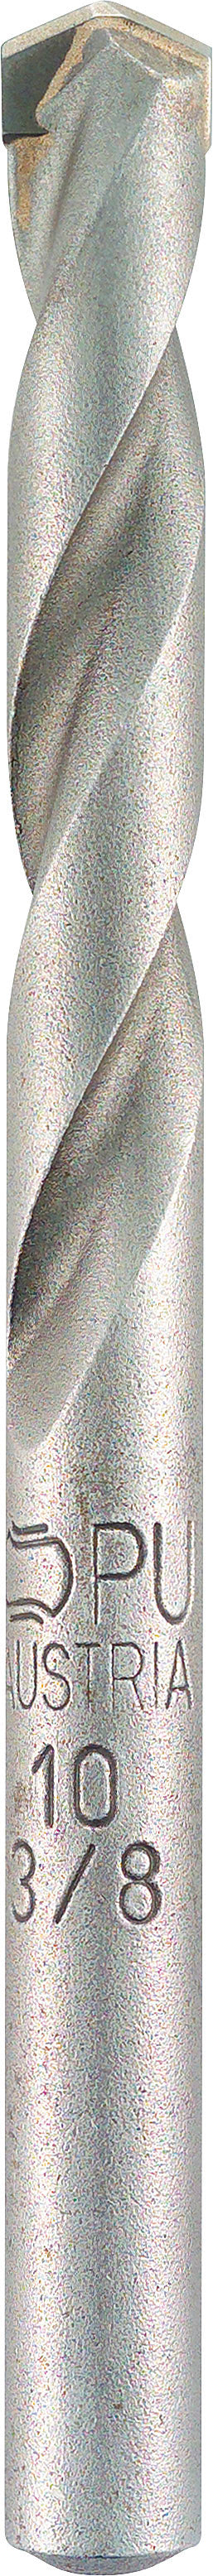 alpen-masonry-drill-bit-long-life-5.0-x-150mm-alp71805-1